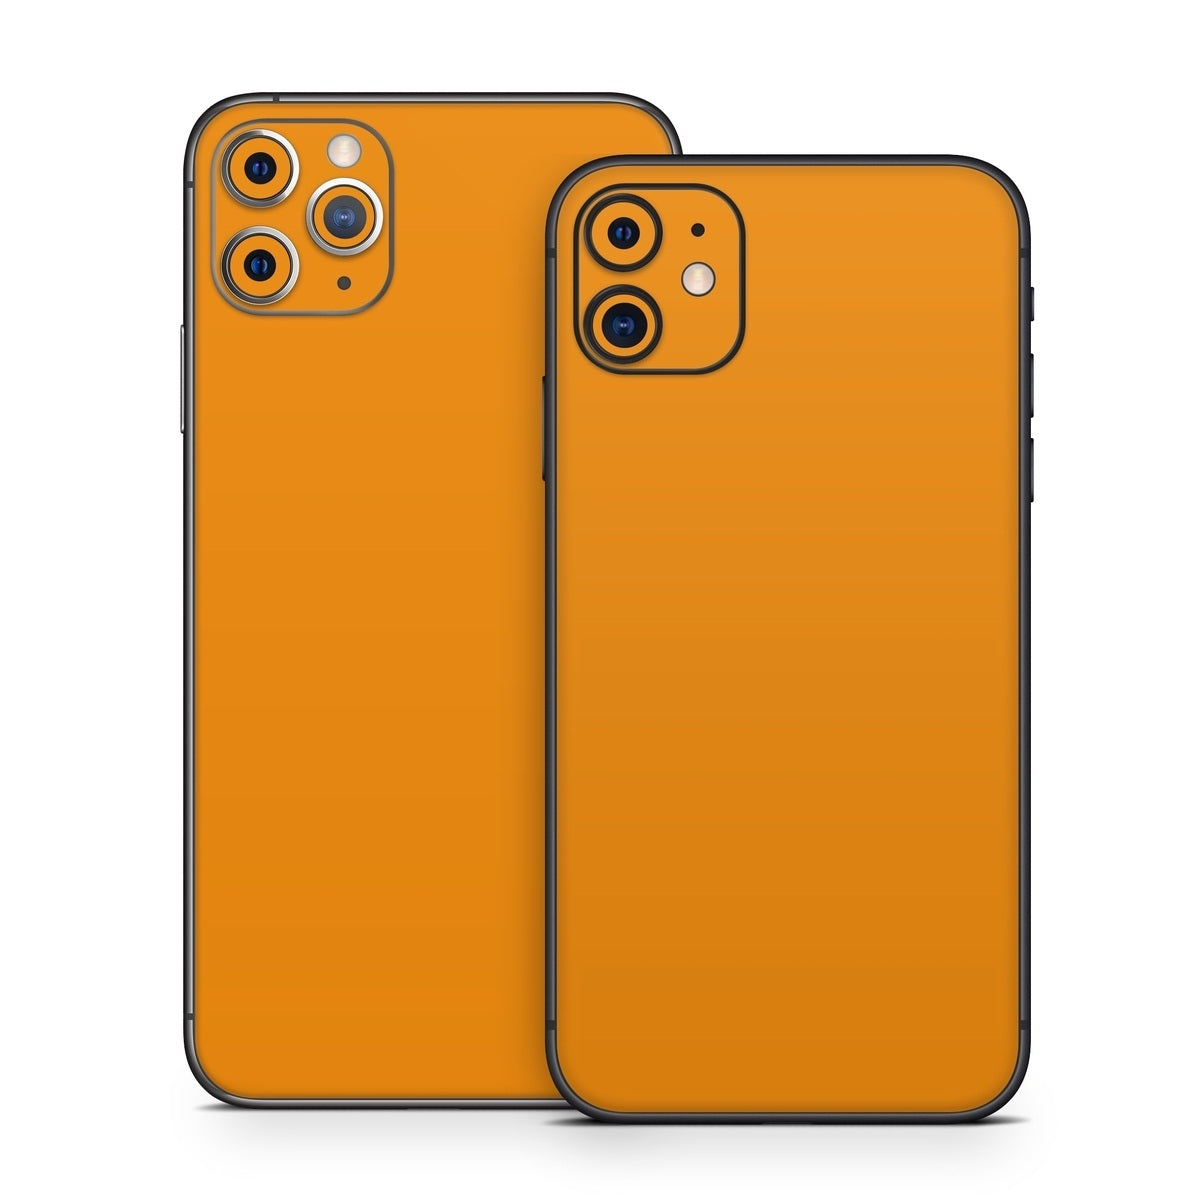 Solid State Orange - Apple iPhone 11 Skin